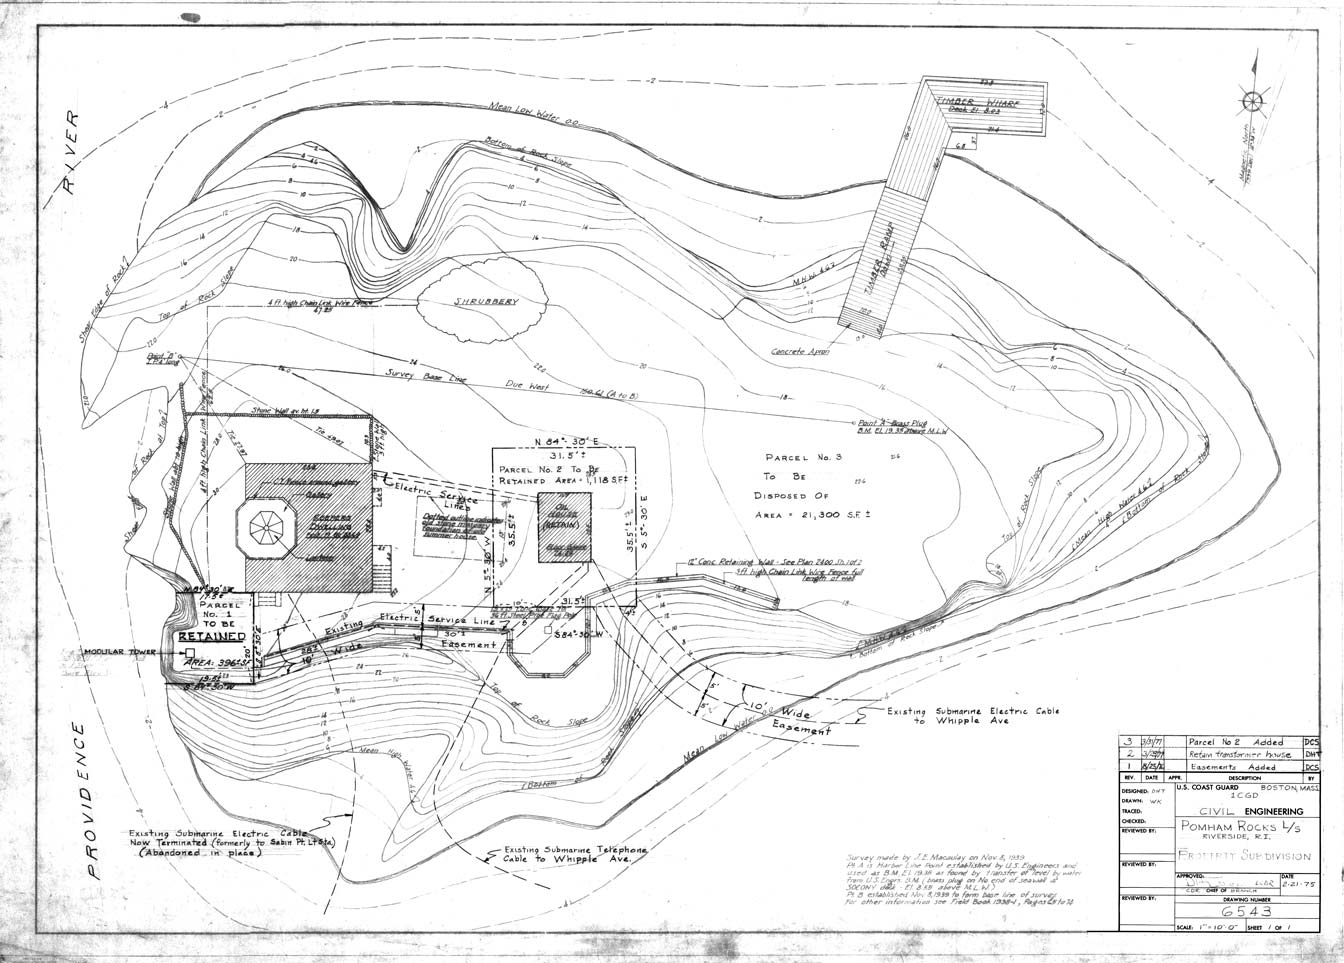 Pomham Rocks Light Station Property Subdivision - No. 6543 - 1977